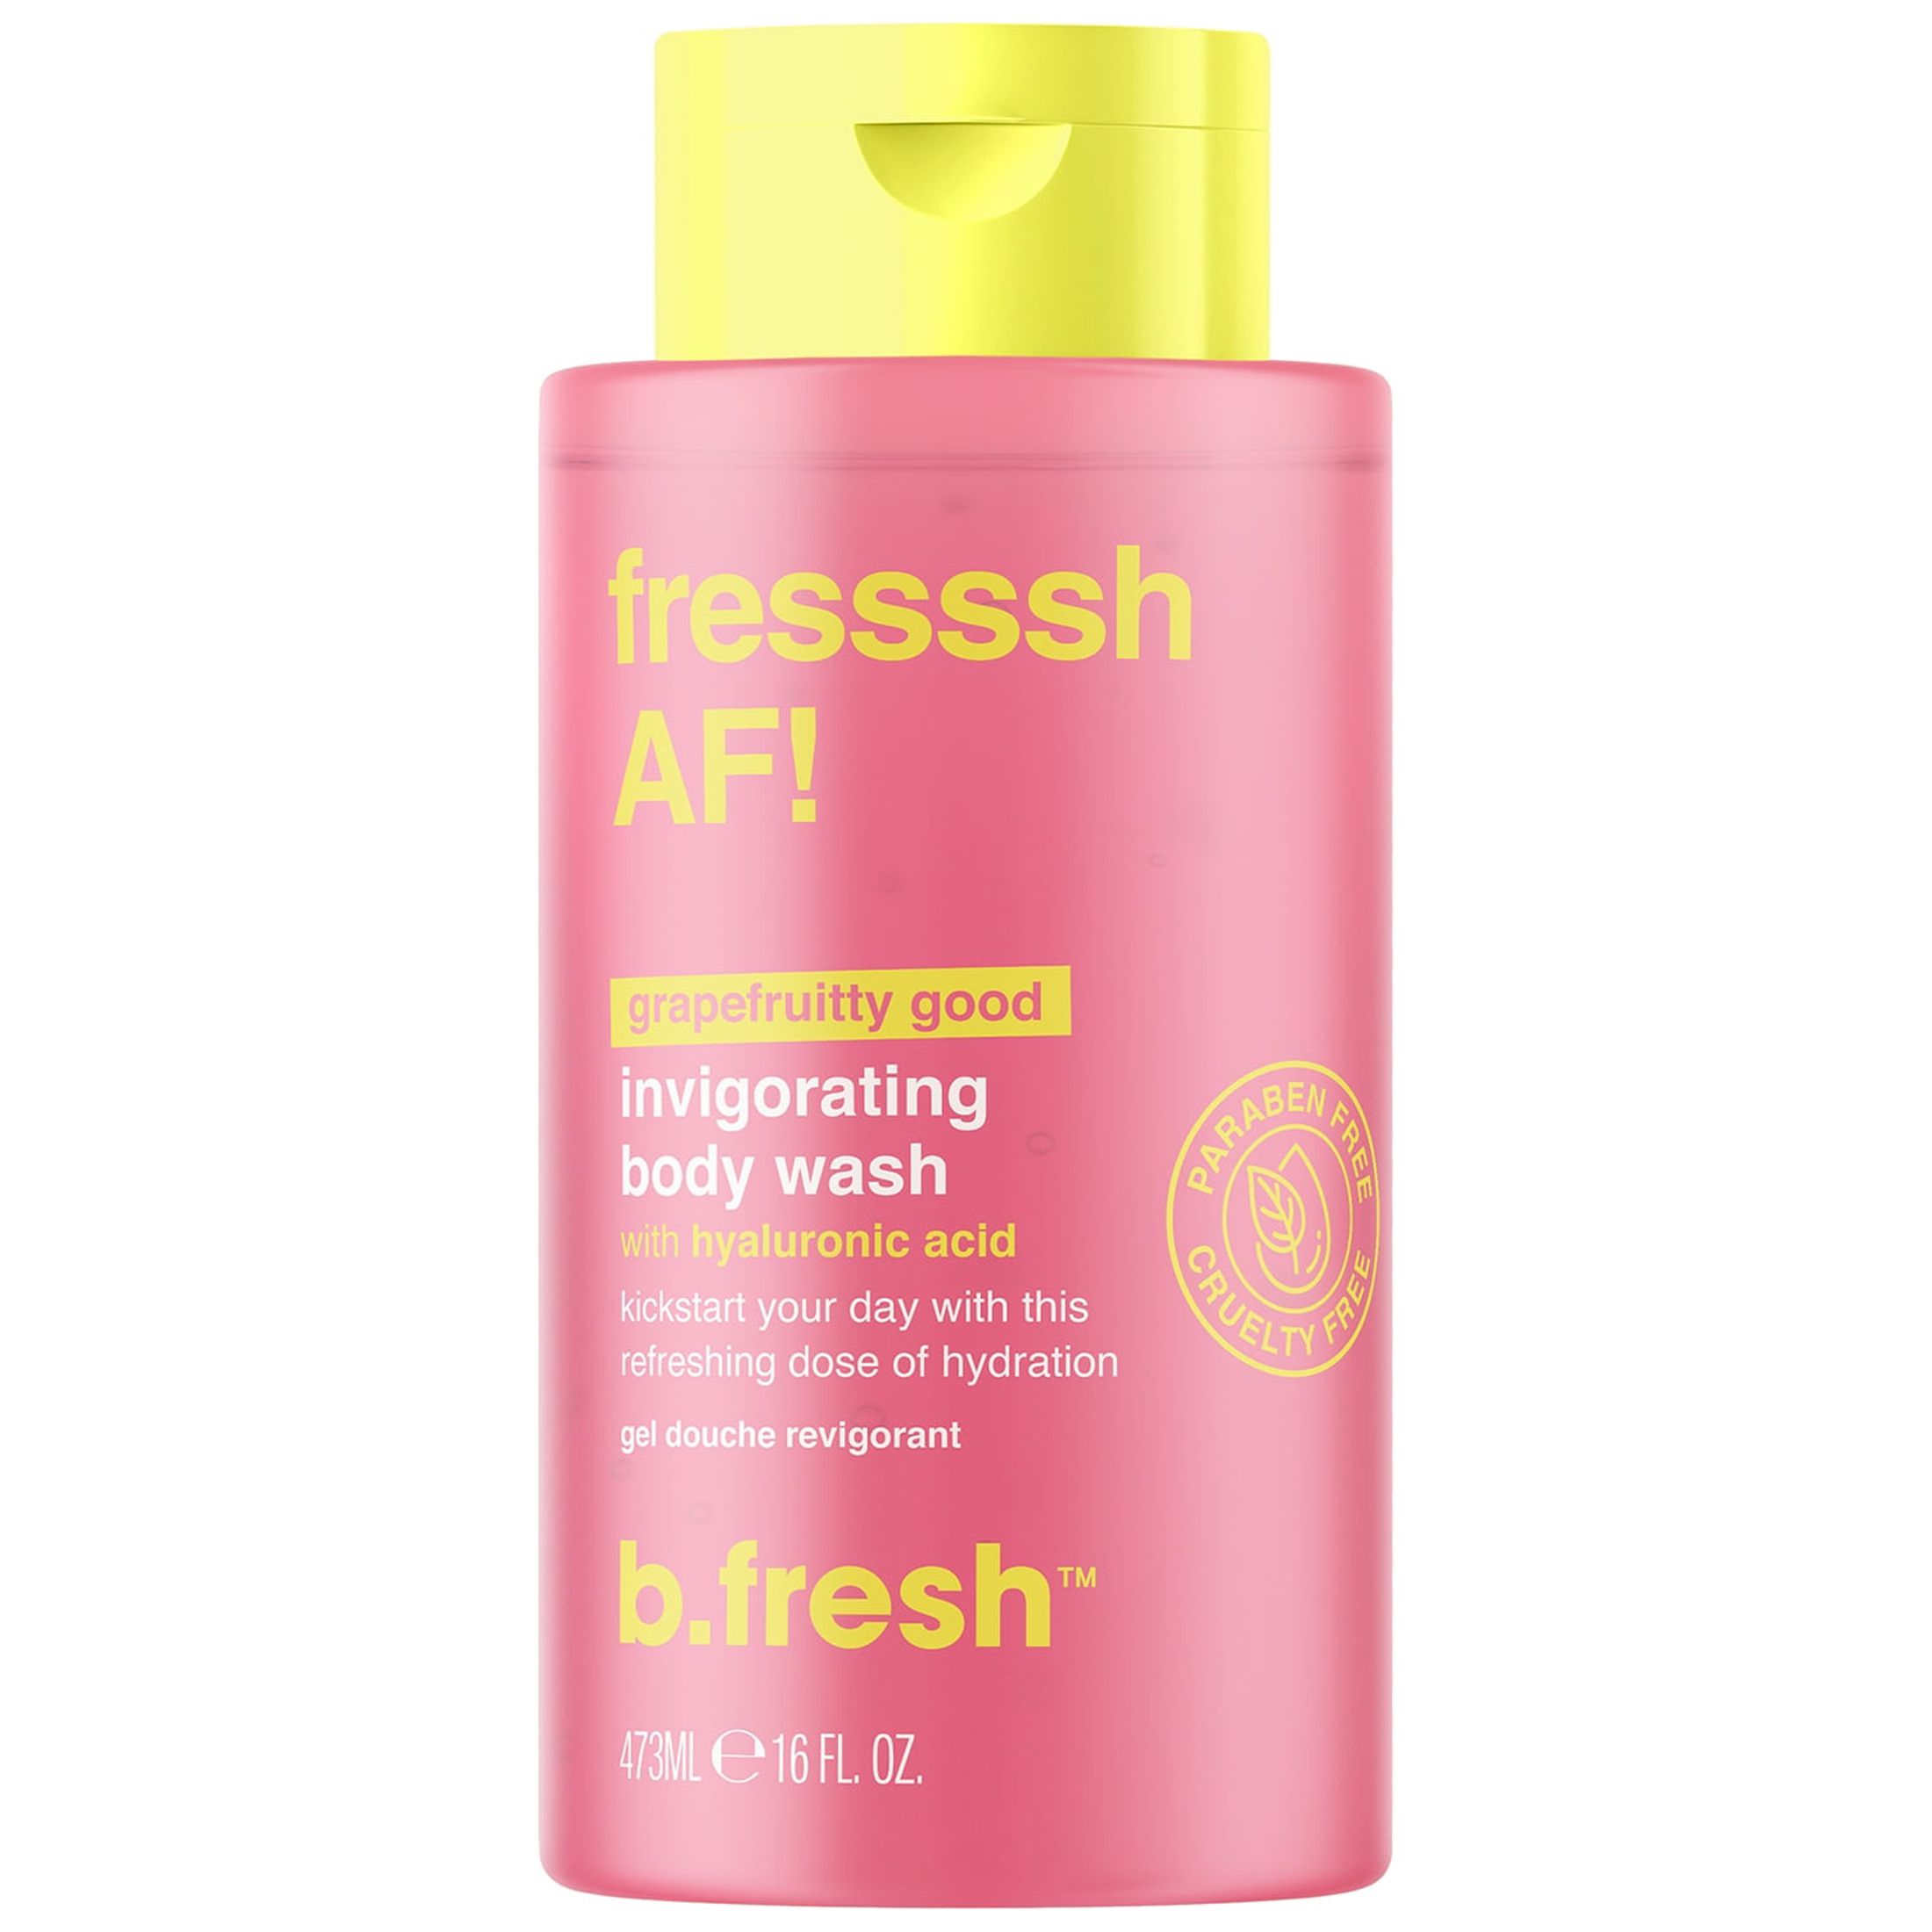 b.fresh invigorating body wash fressssh AF! 16 fl oz - image 1 of 5